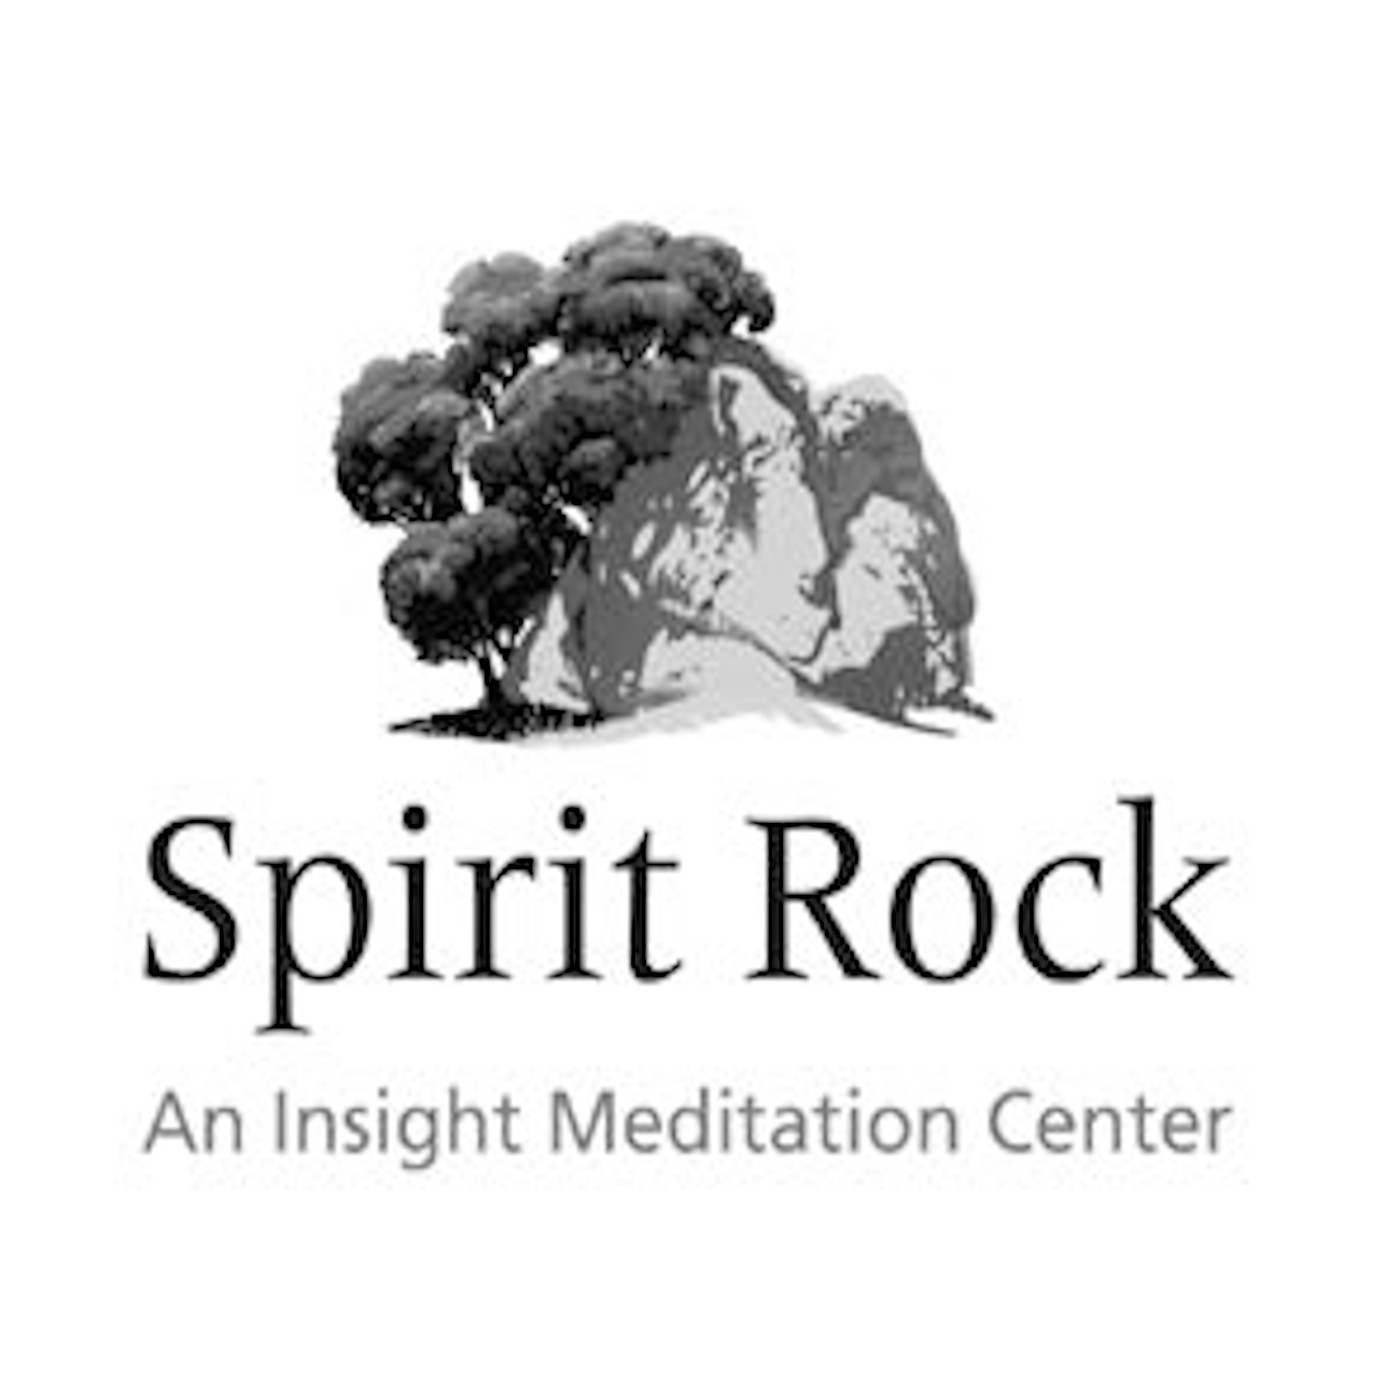 Mark Coleman: Monday Night Live Talk from Spirit Rock